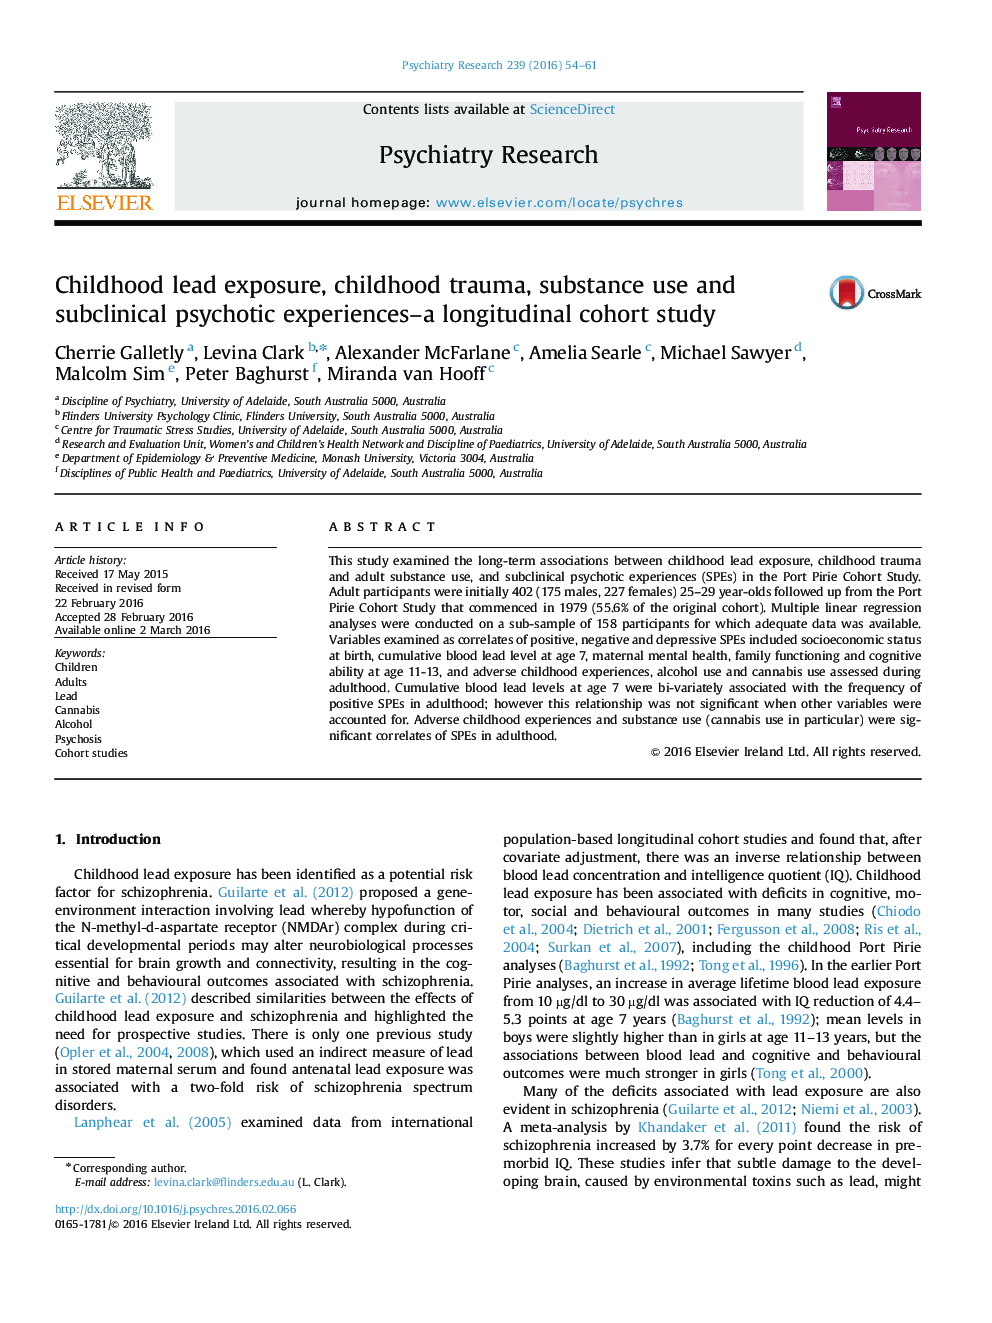 Childhood lead exposure, childhood trauma, substance use and subclinical psychotic experiences-a longitudinal cohort study